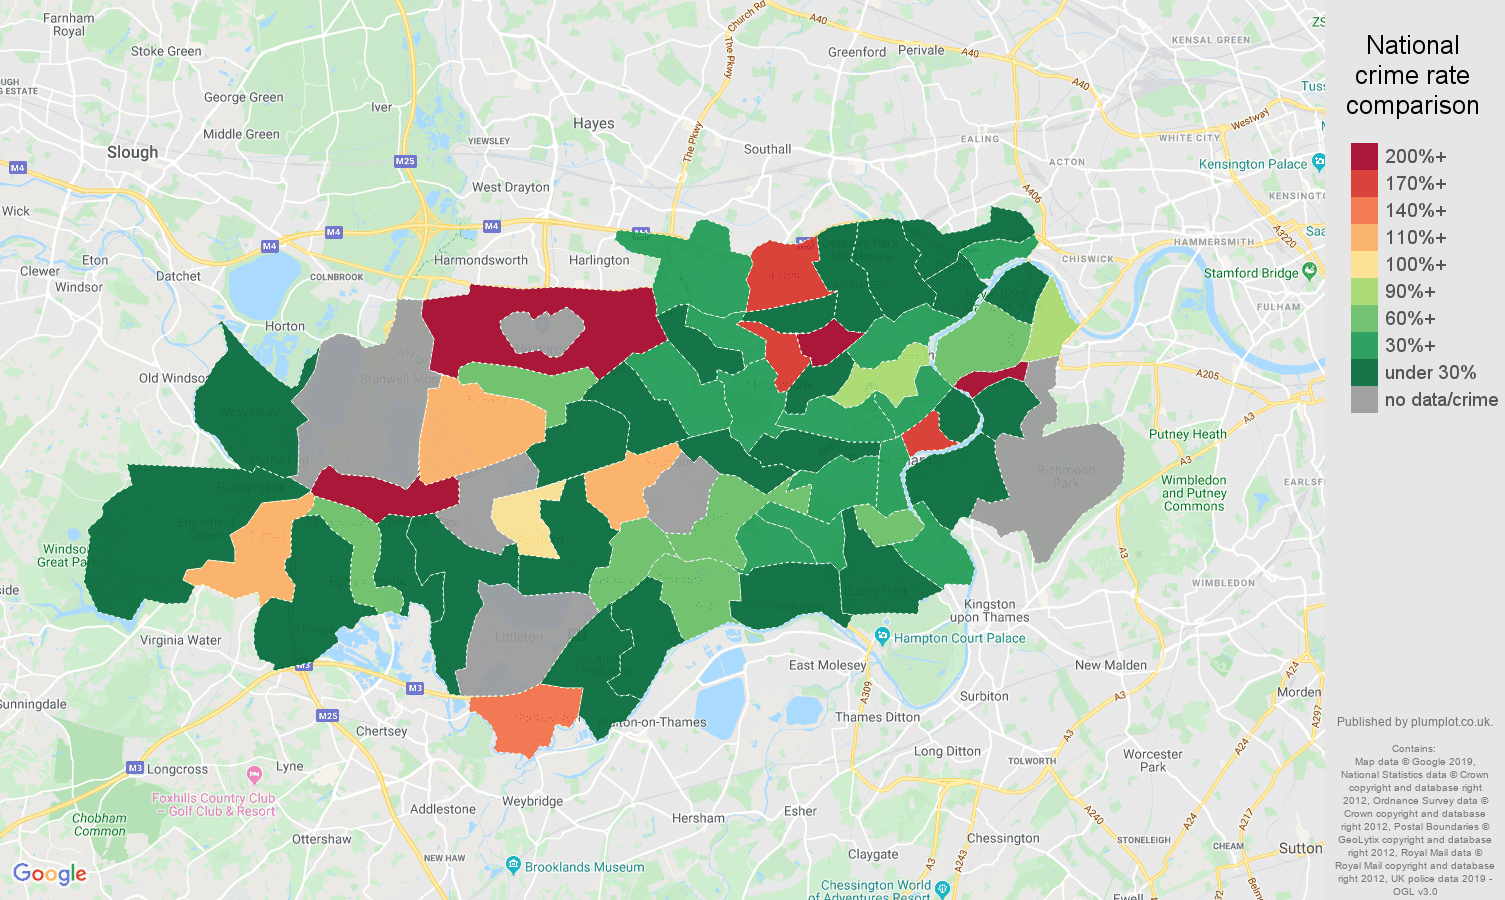 Twickenham shoplifting crime rate comparison map